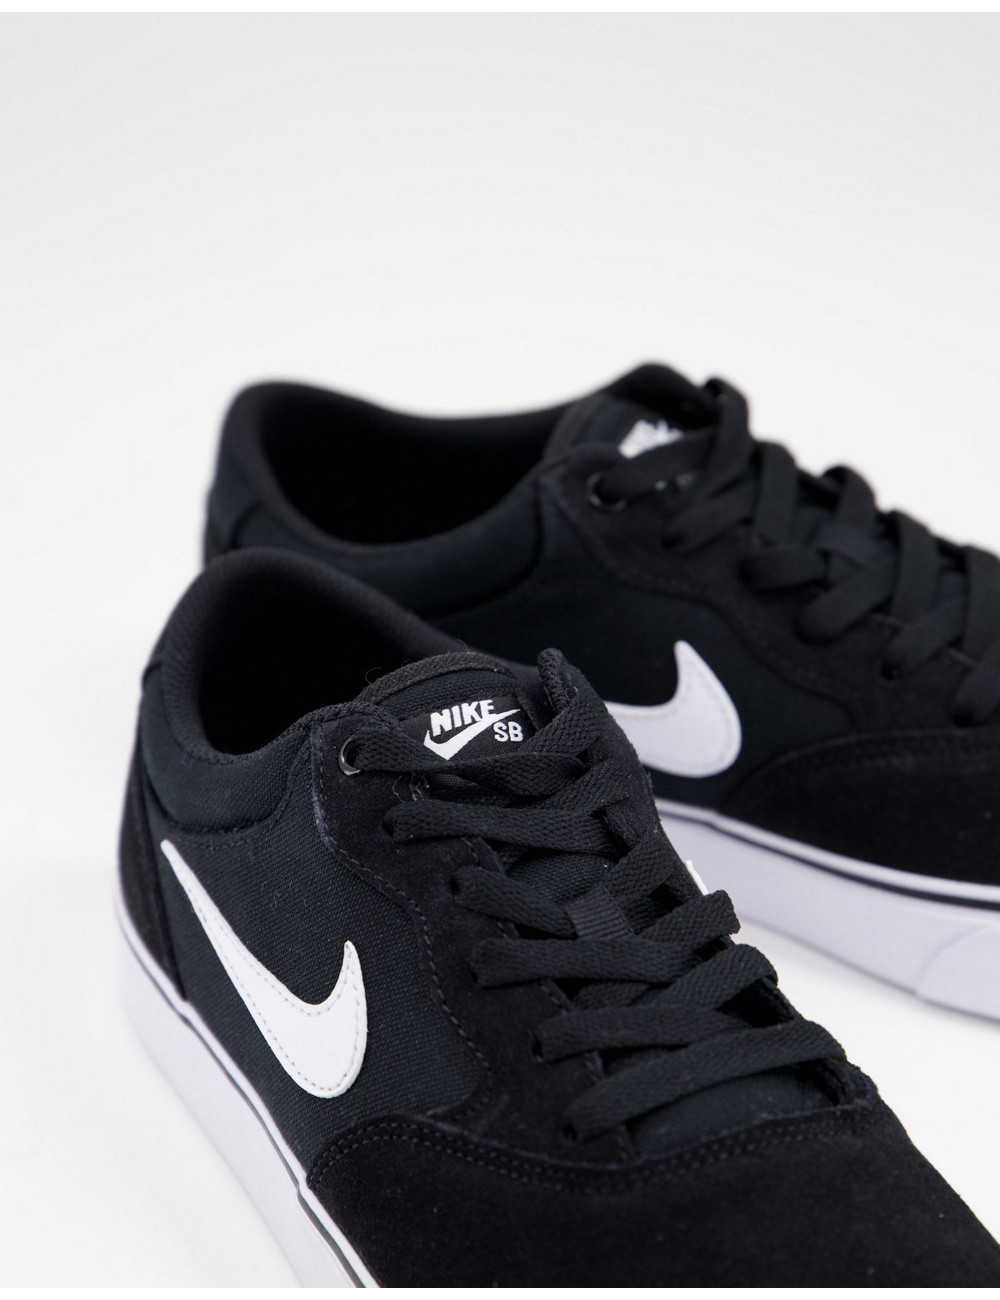 Nike SB Chron 2 in black